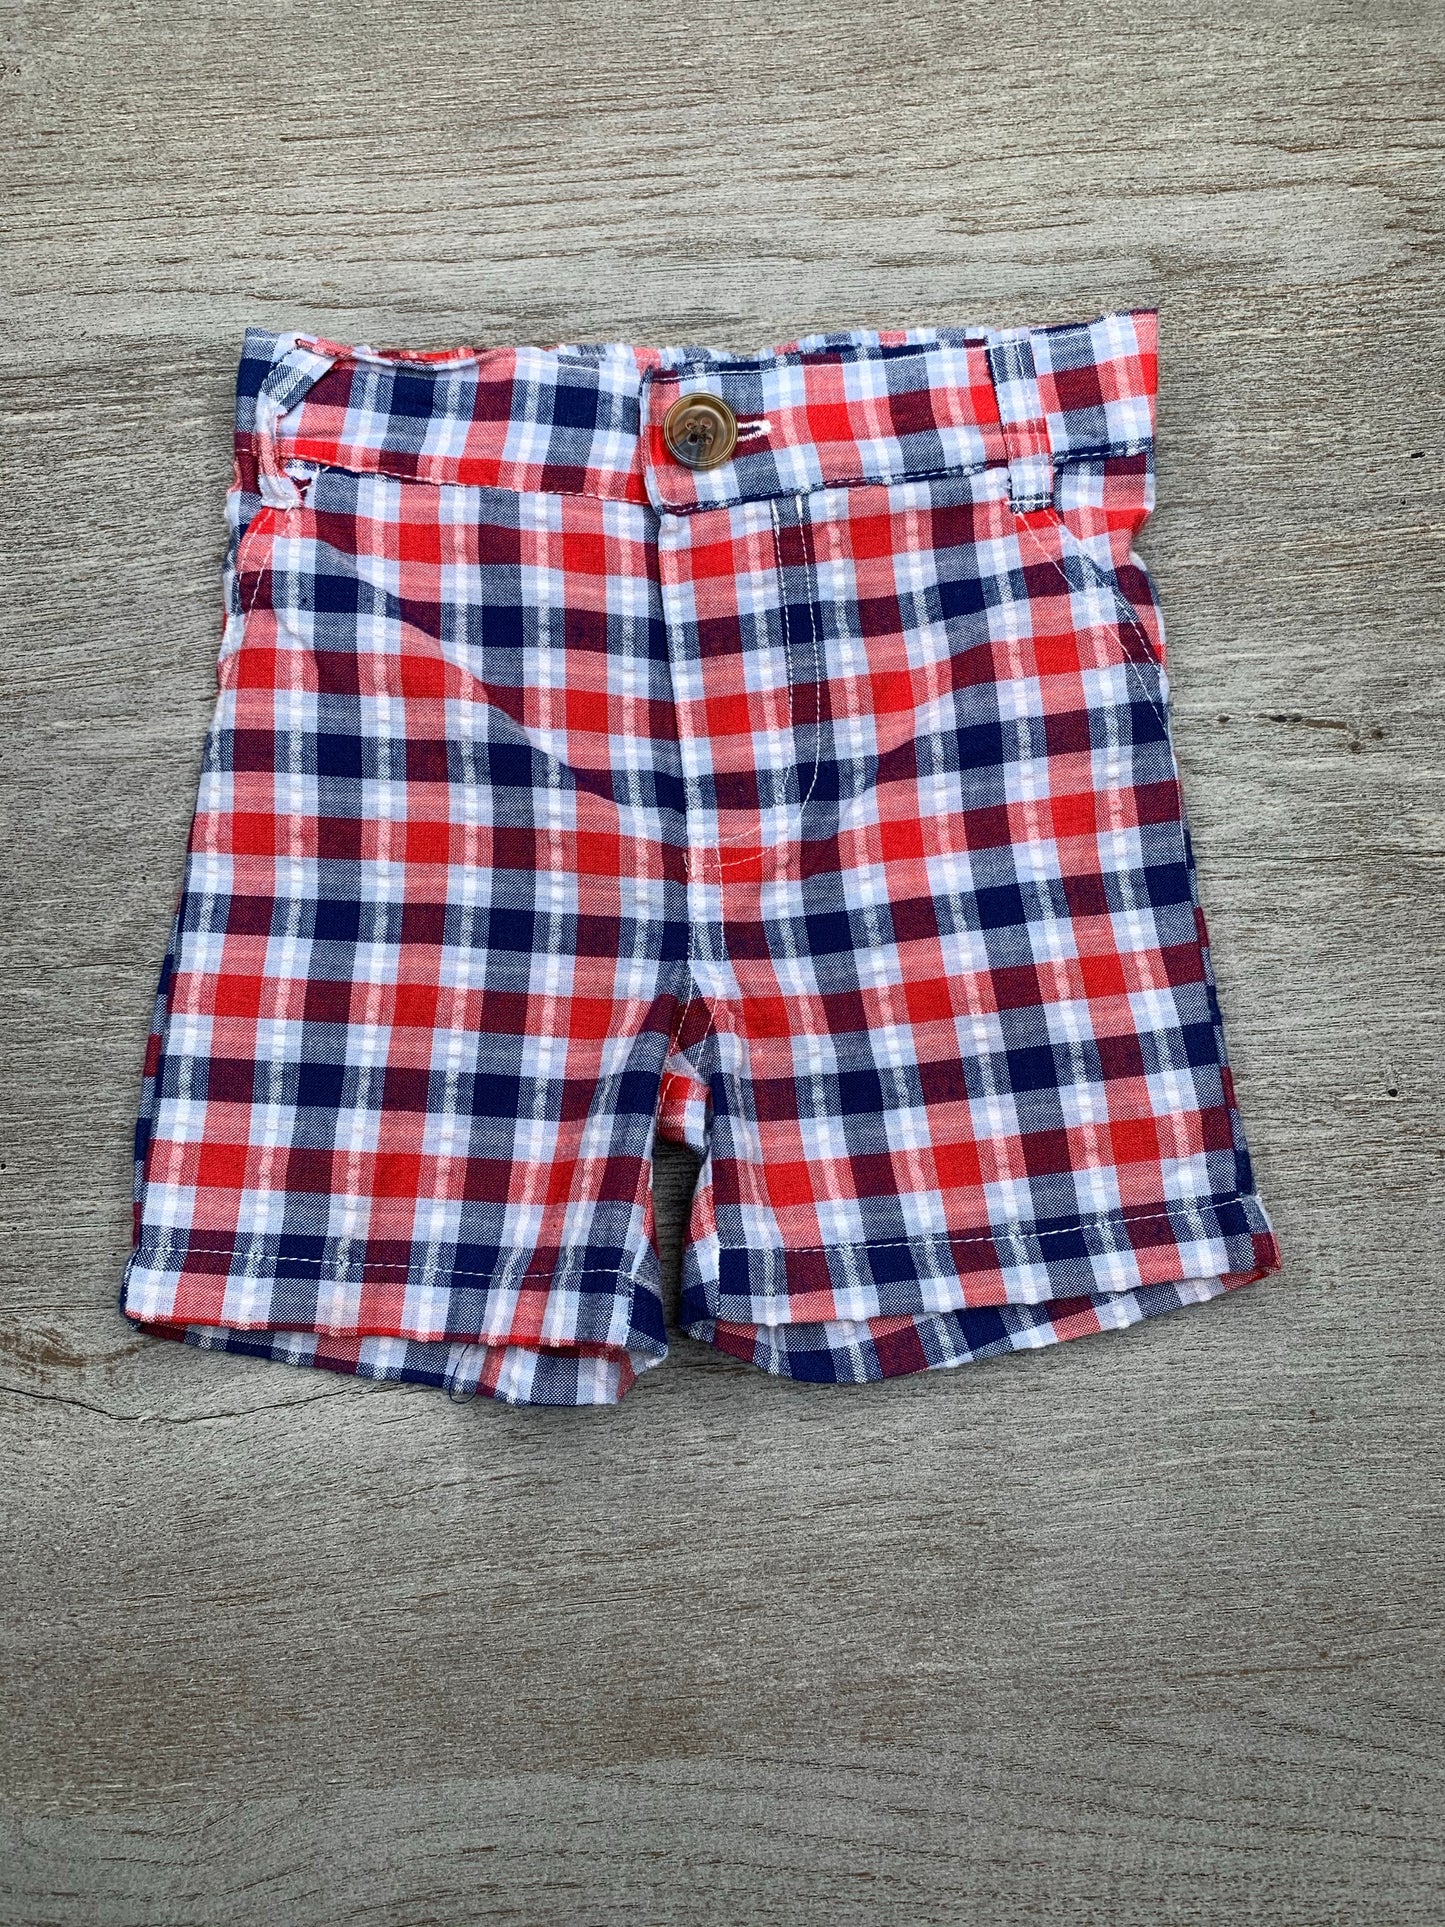 Blue & Red Plaid Shorts